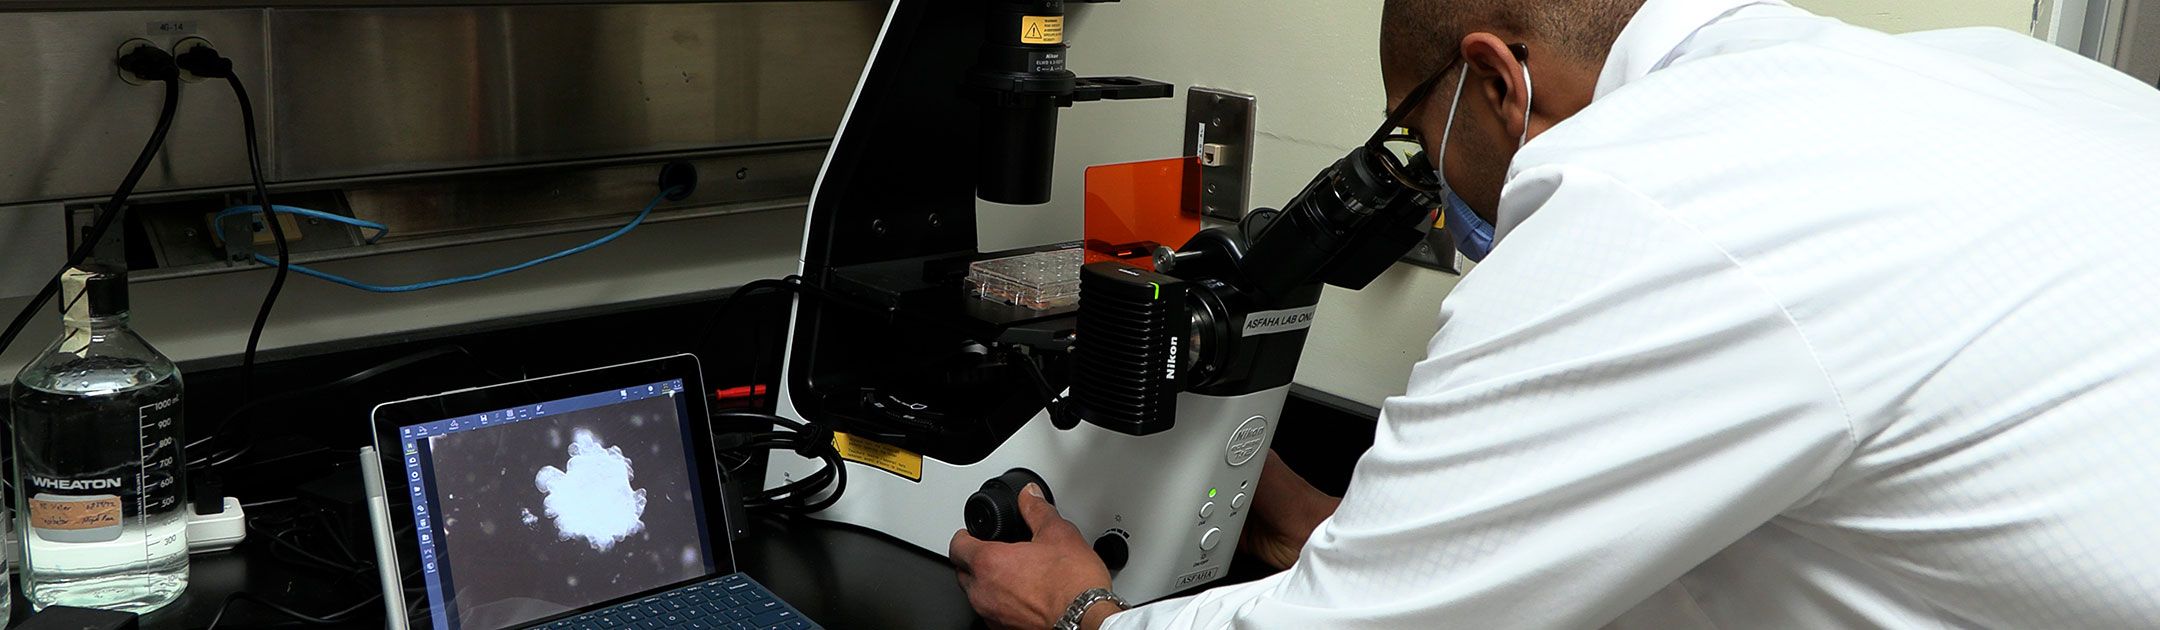 Dr. Samuel Asfaha at a microscope